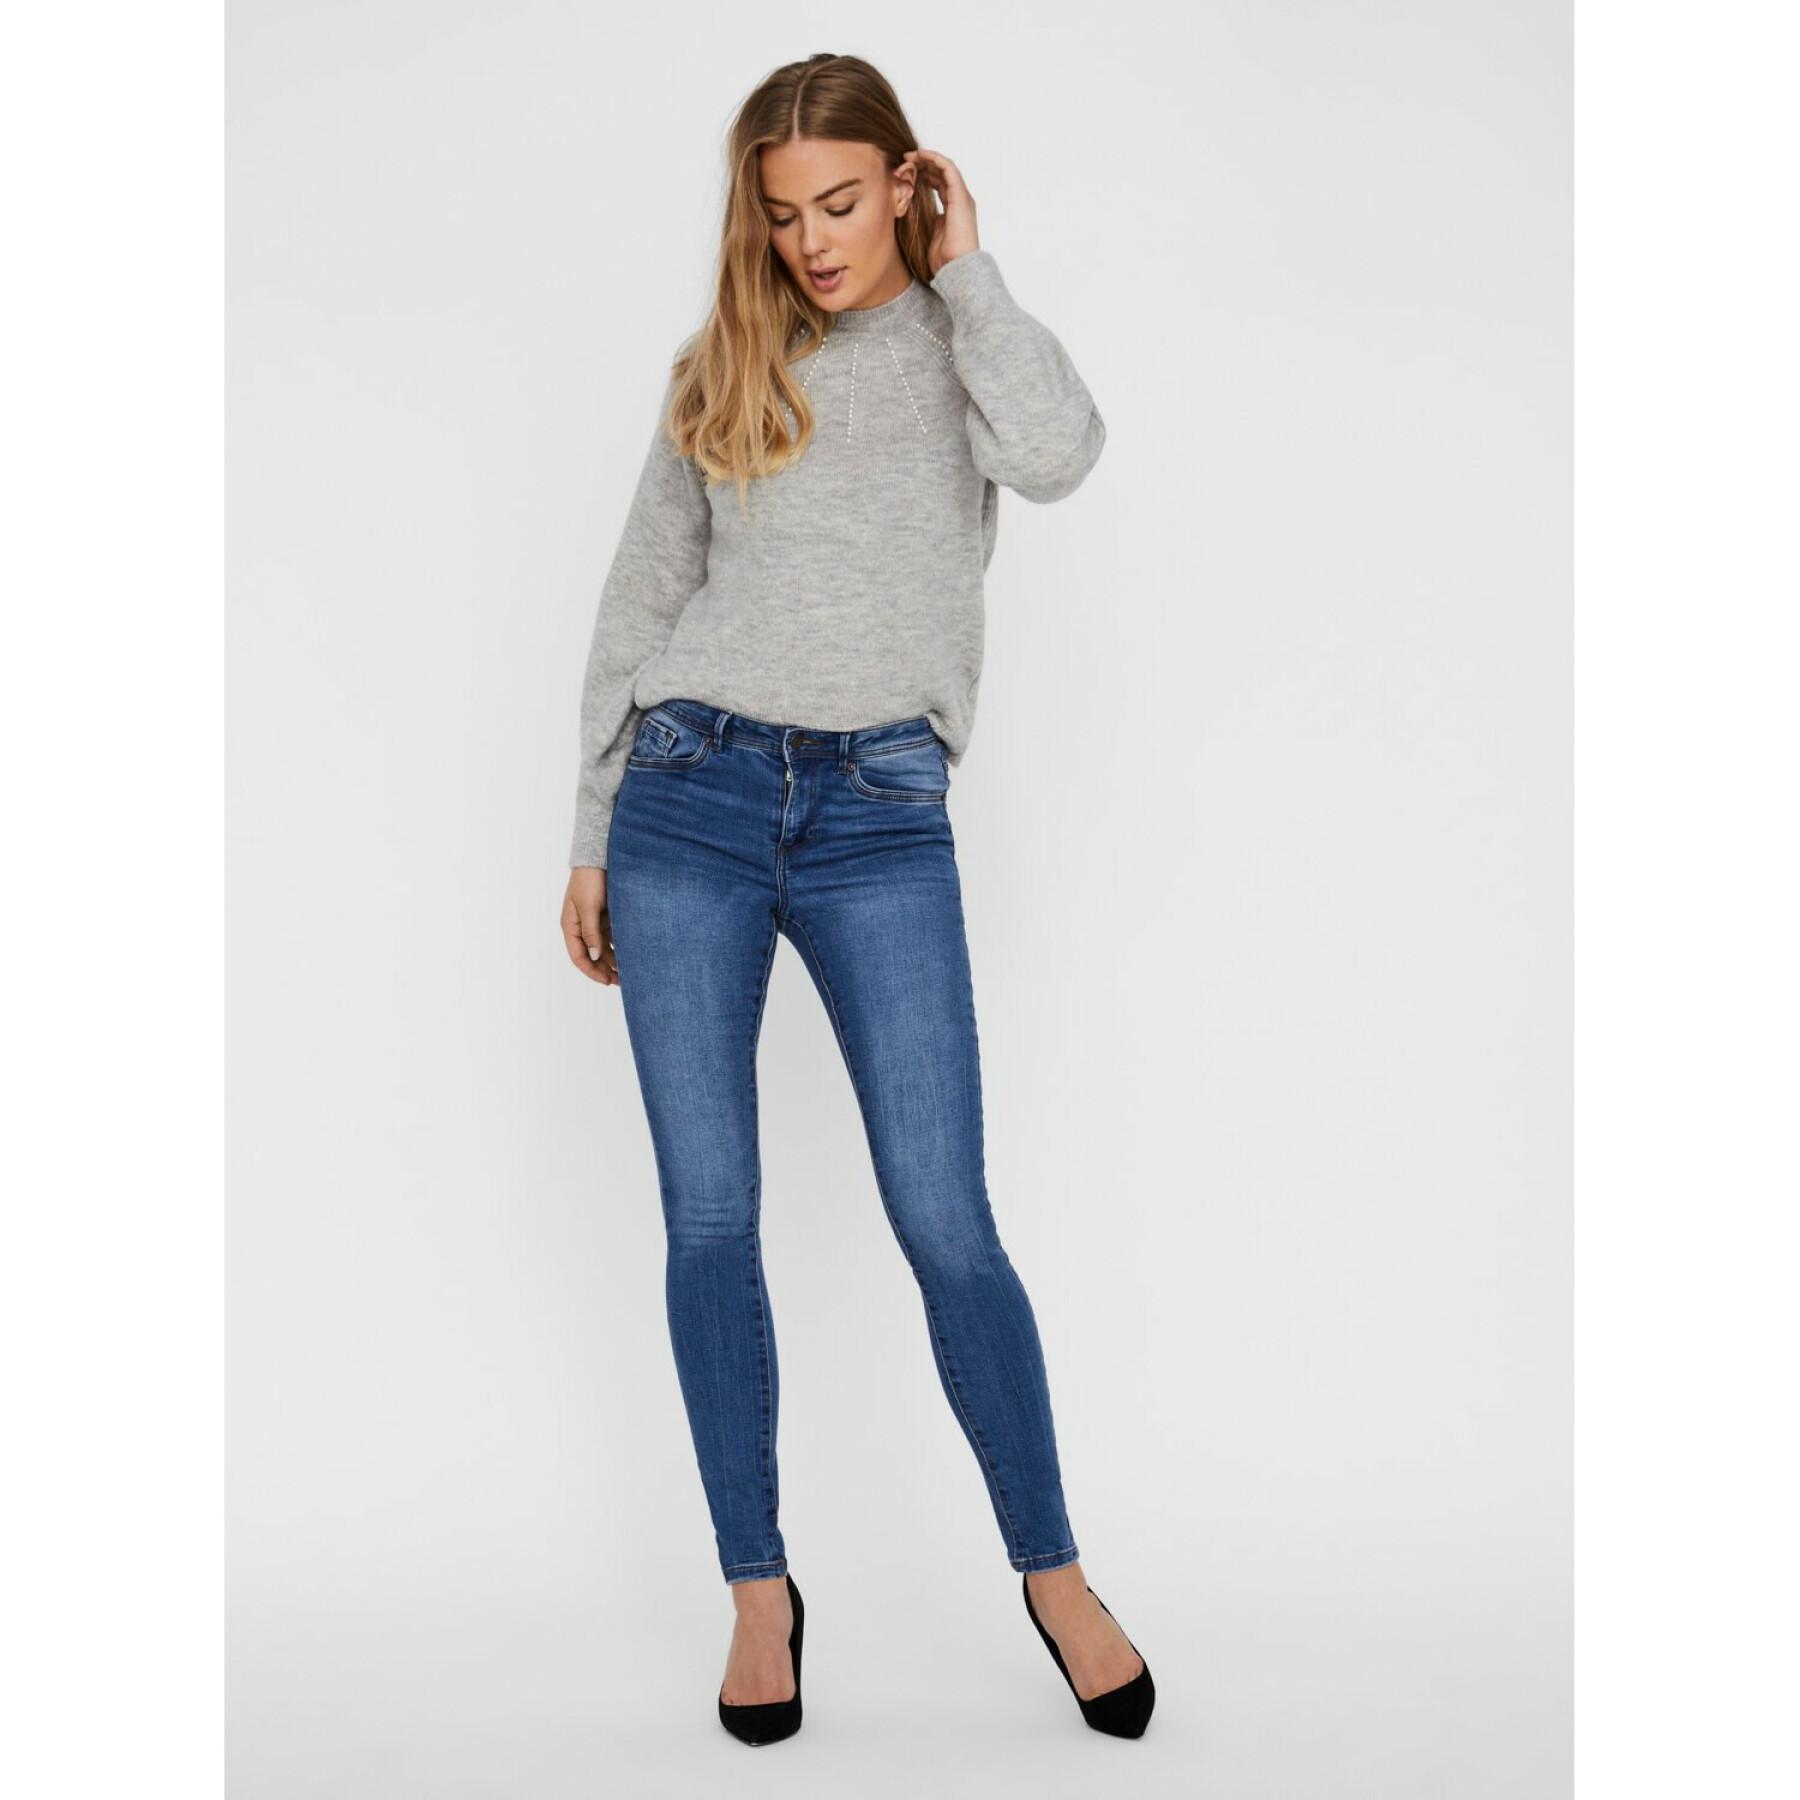 Women's jeans Vero Moda vmtanya 349